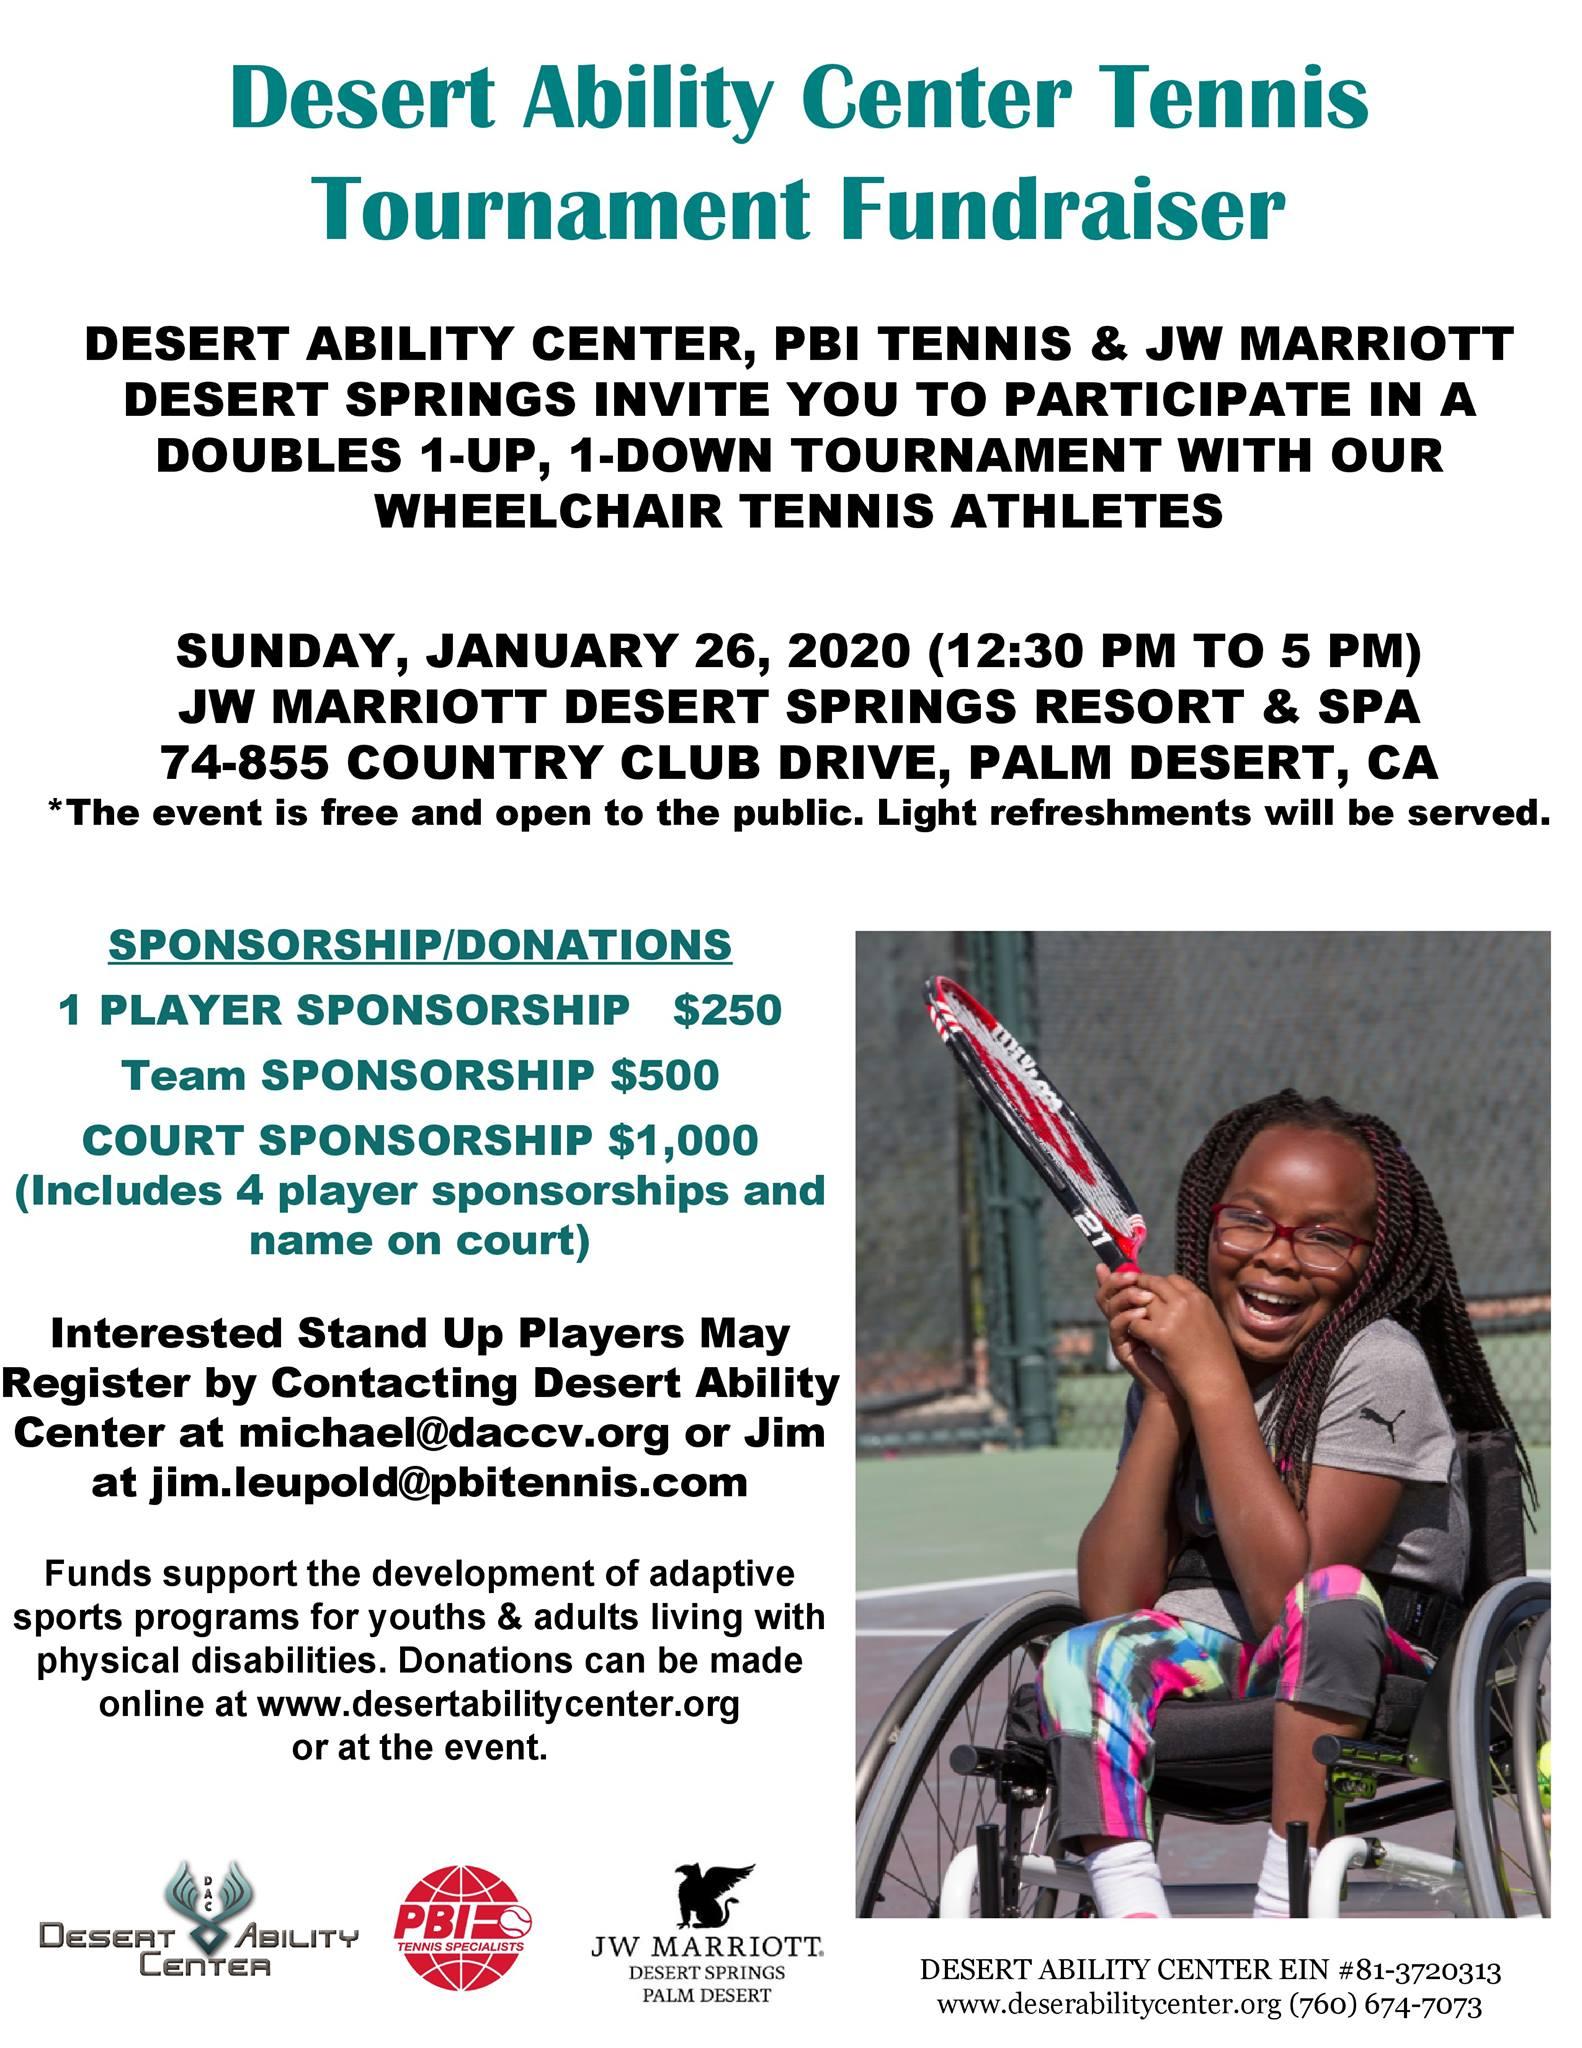 Up/Down Wheelchair Tennis Tournament